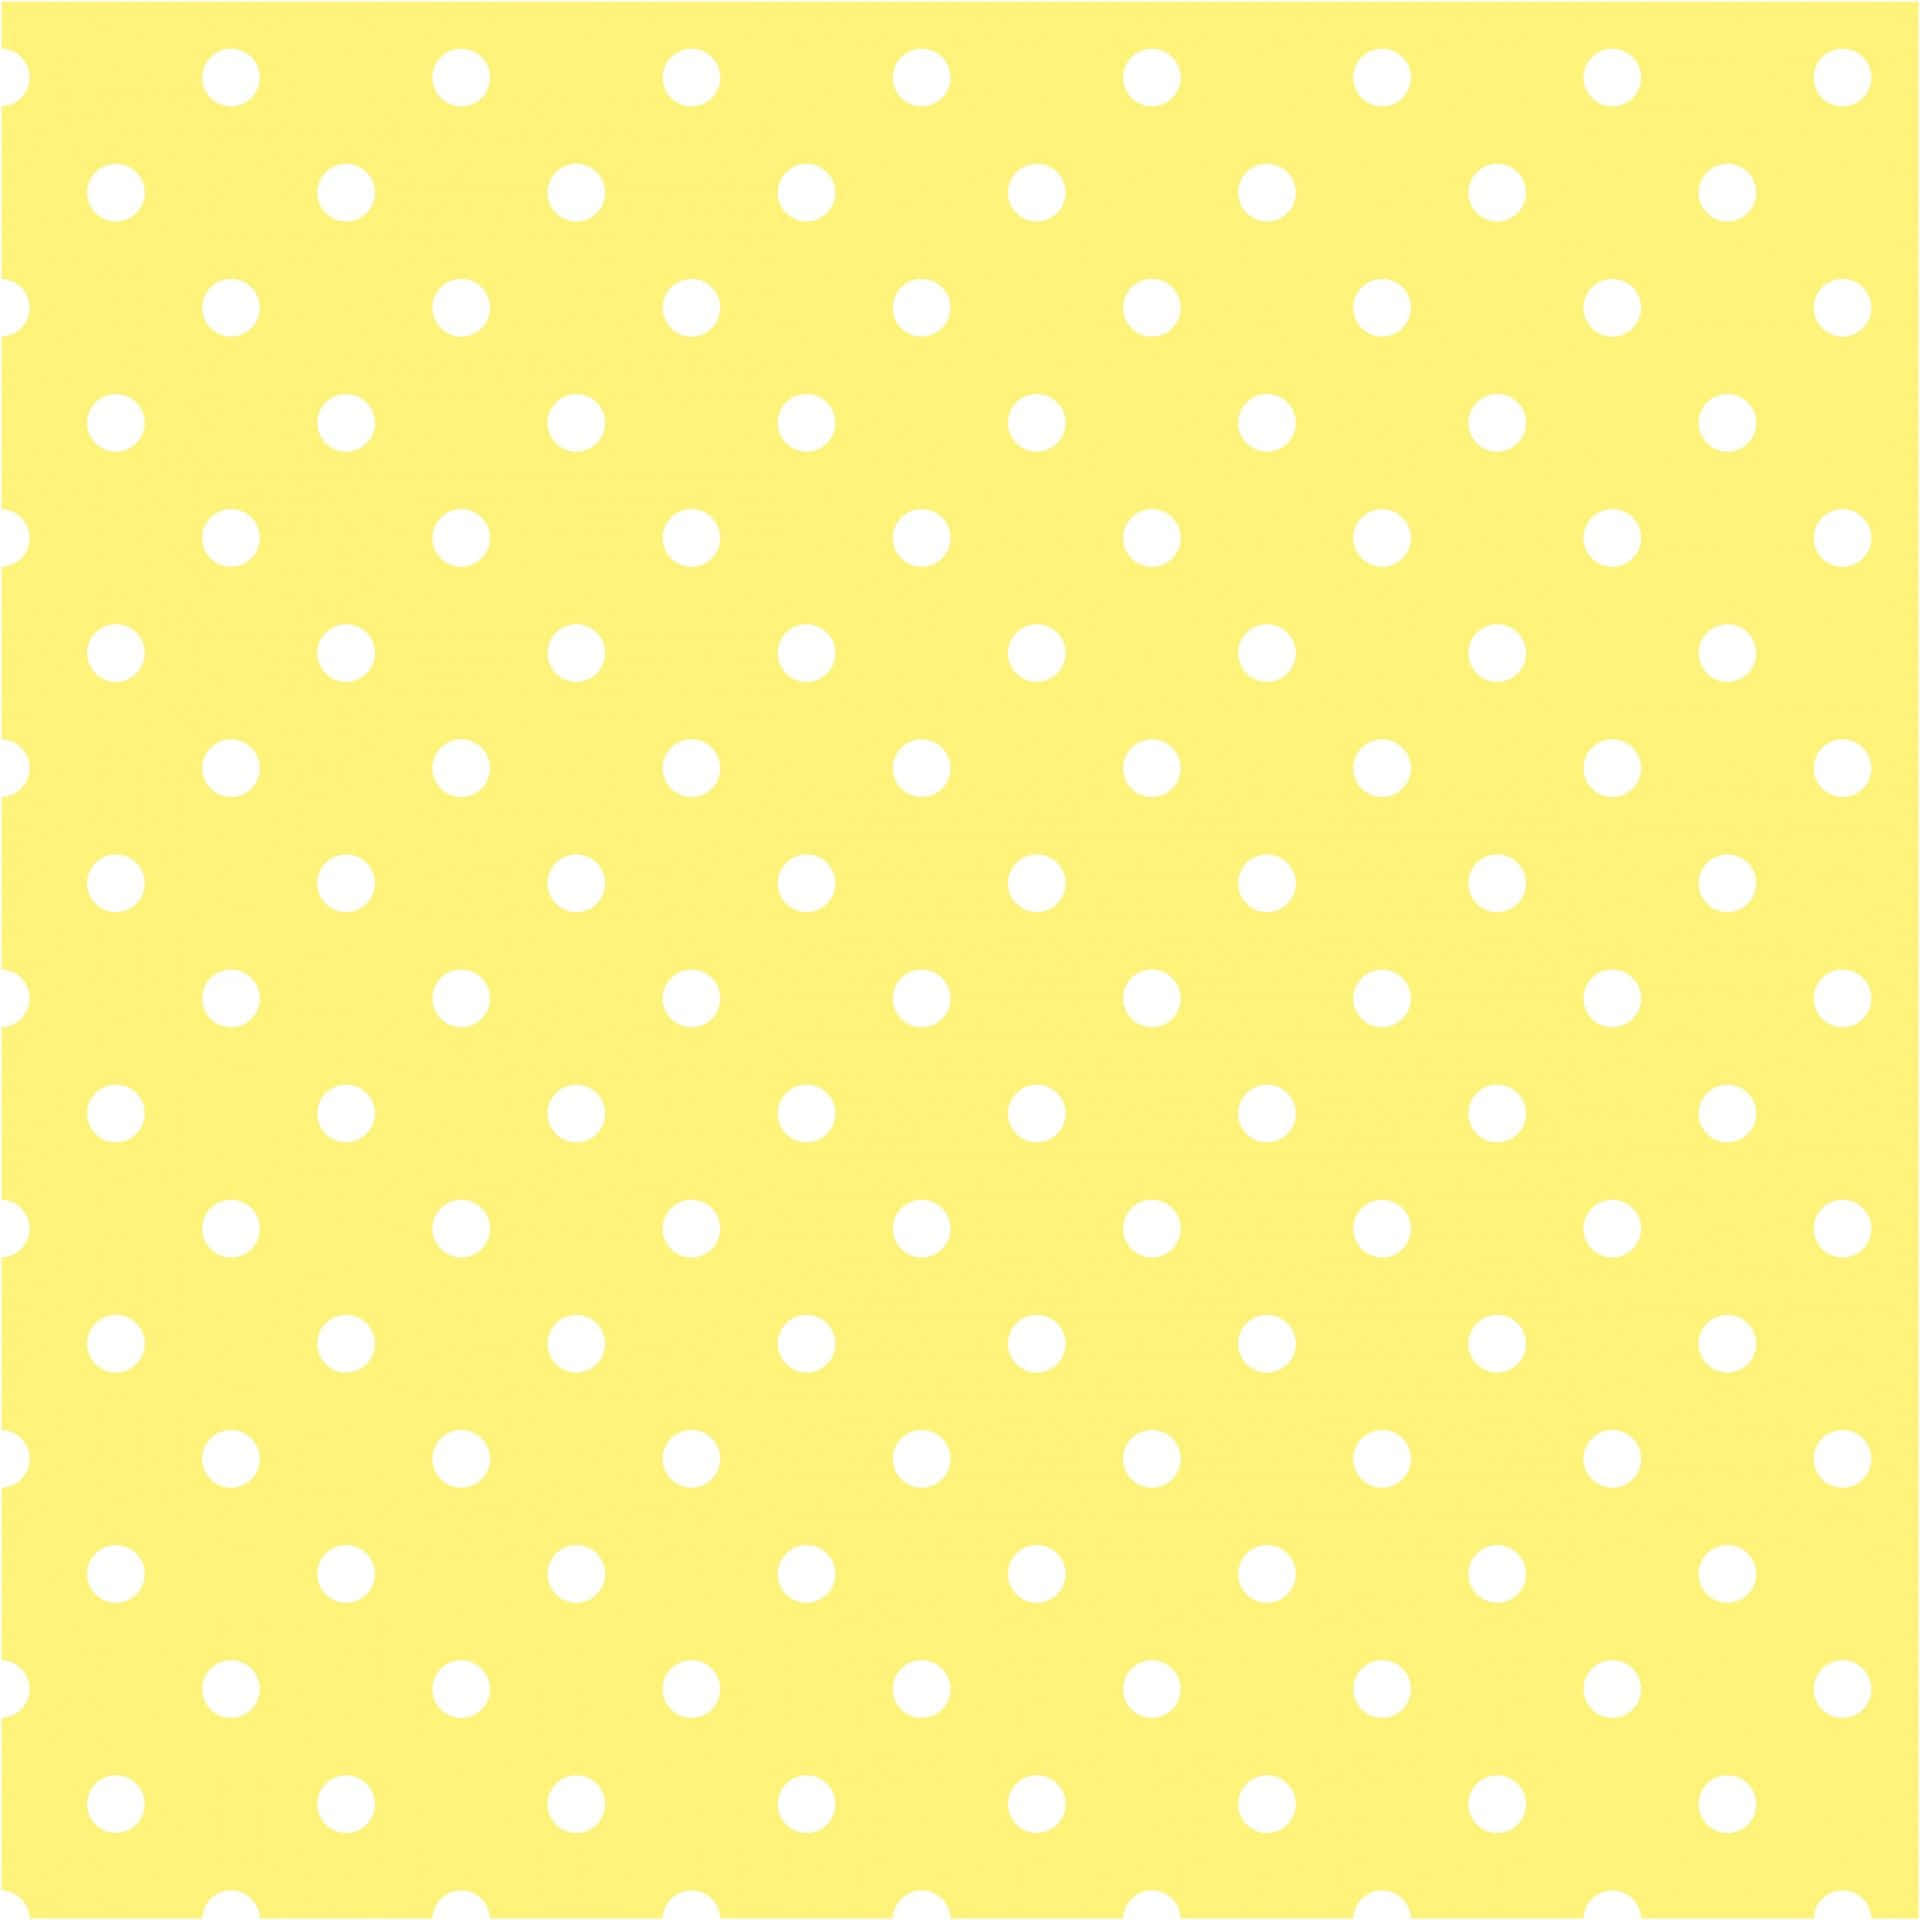 Caption: Vibrant Yellow Polka Dot Background Wallpaper